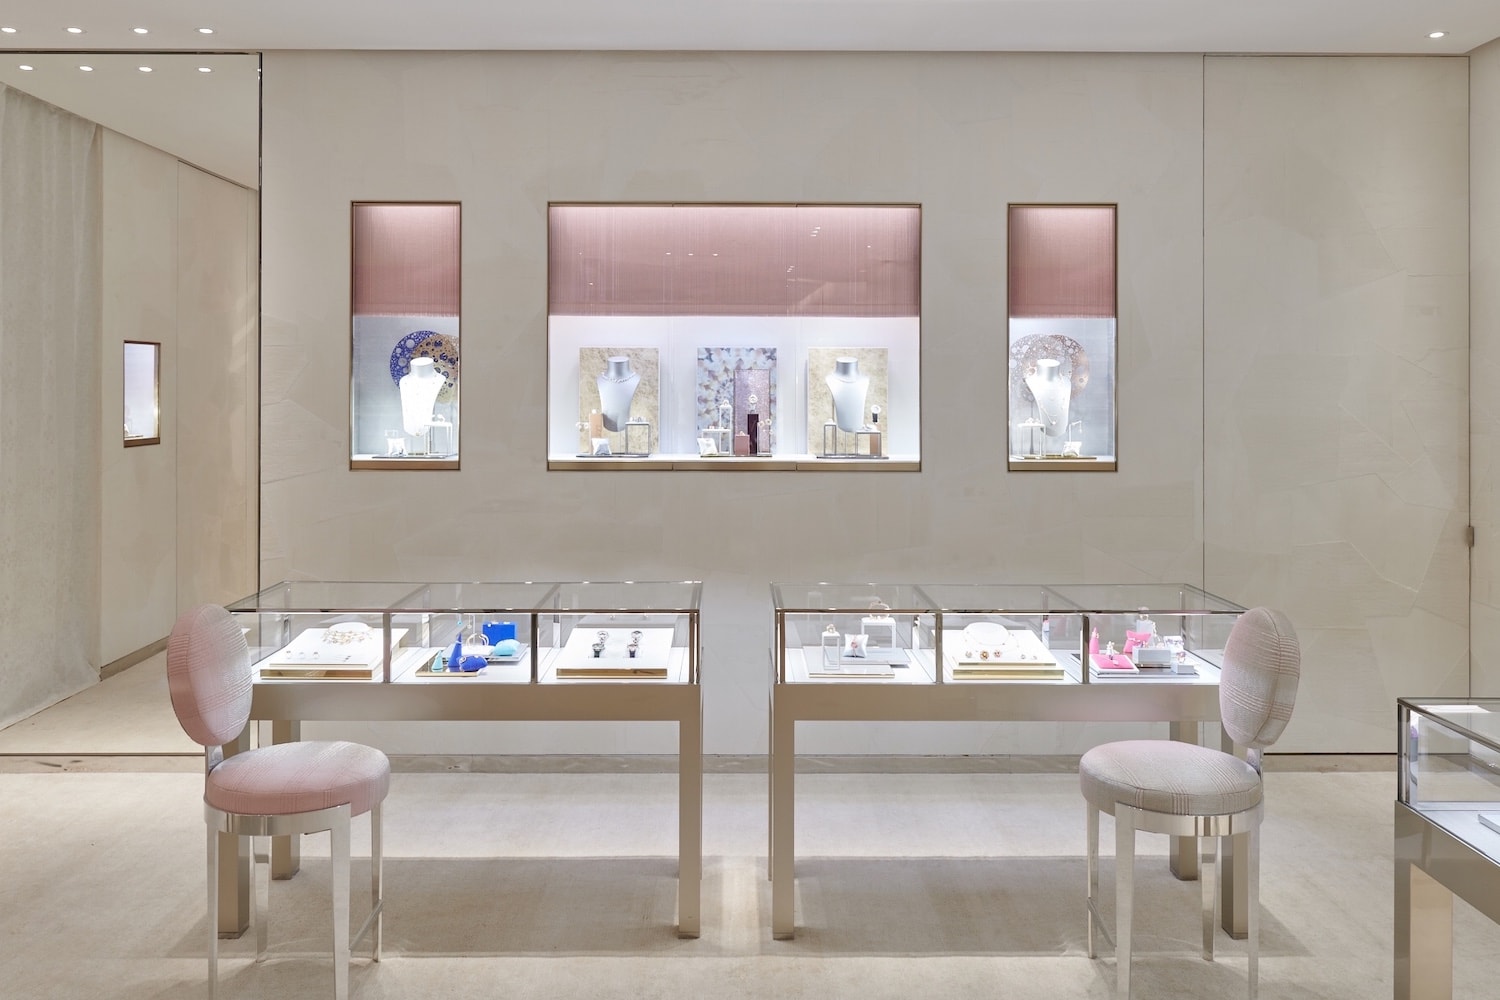 Dior 于摩纳哥开设全新精品店